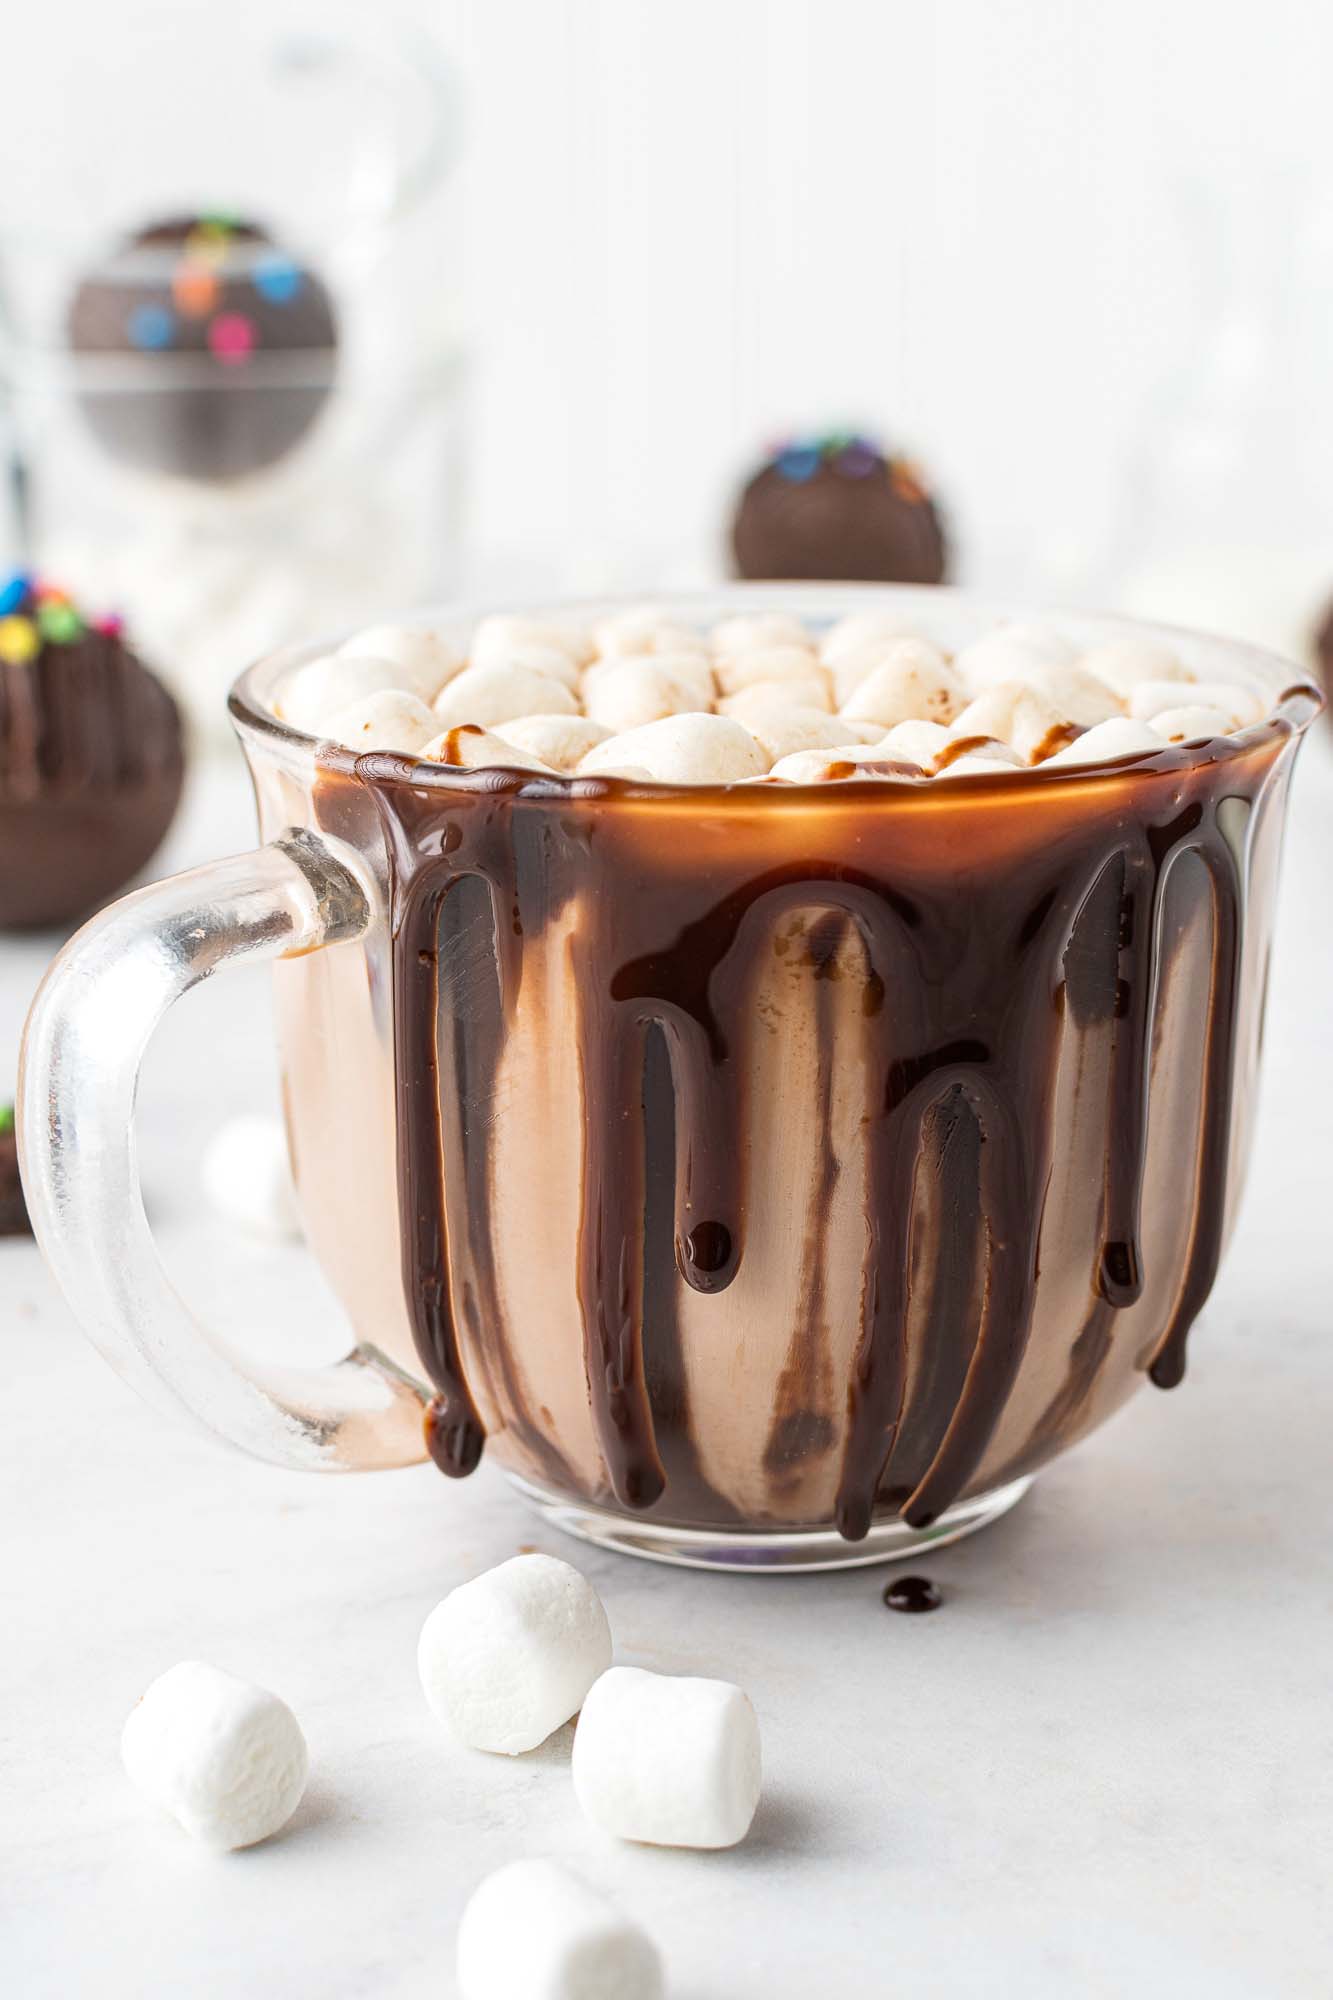 A mug of hot chocolate with chocolate syrup